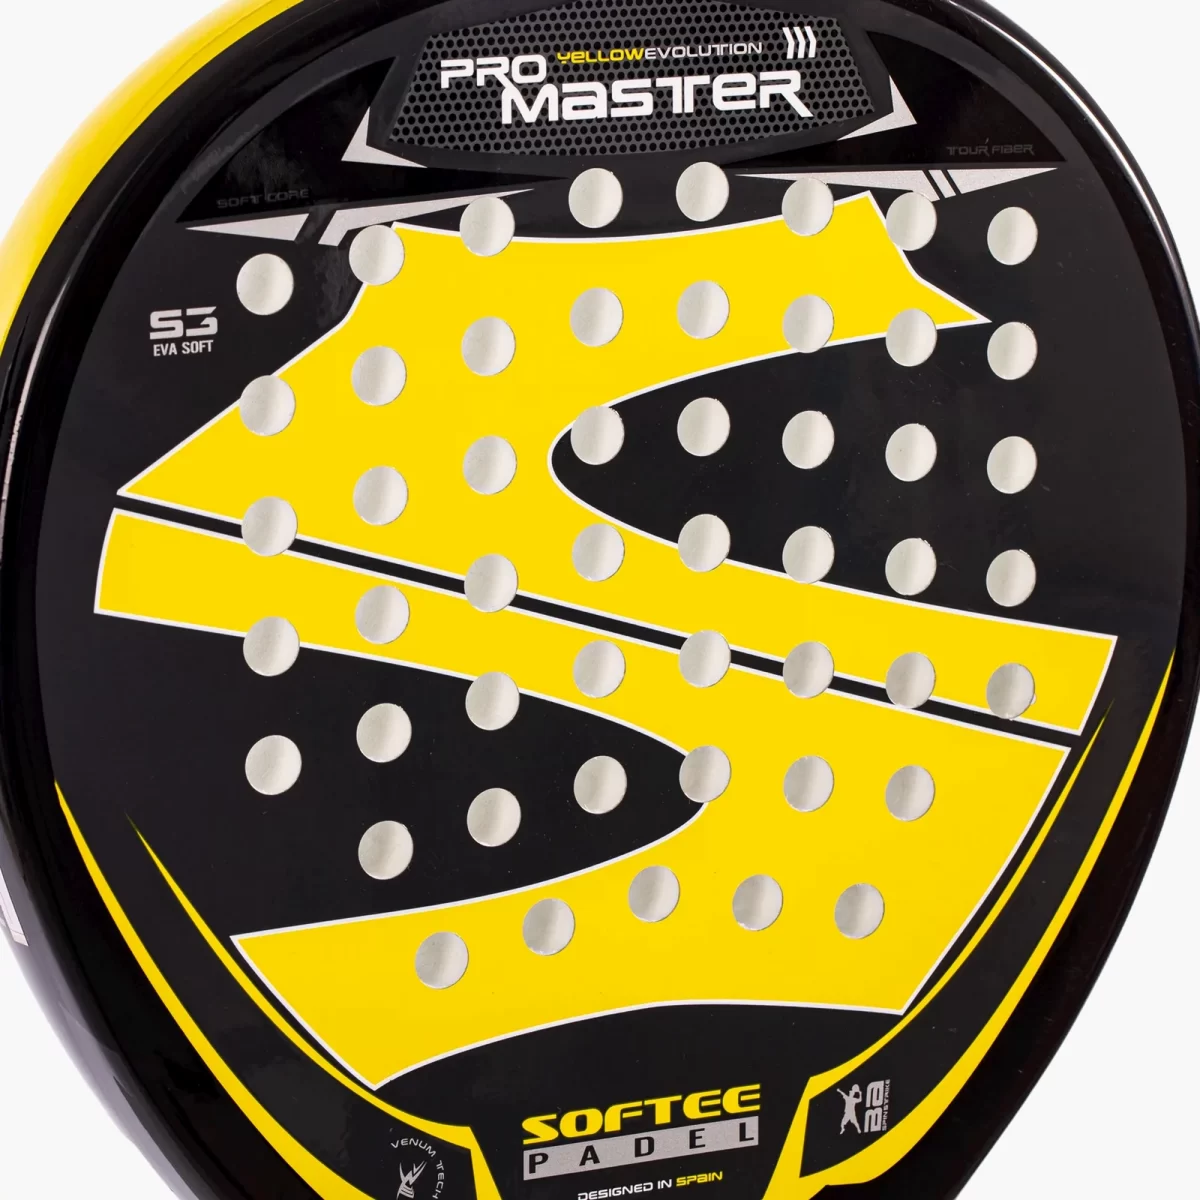 SOFTEE Padel Racket Pro Master Evolution Yellow